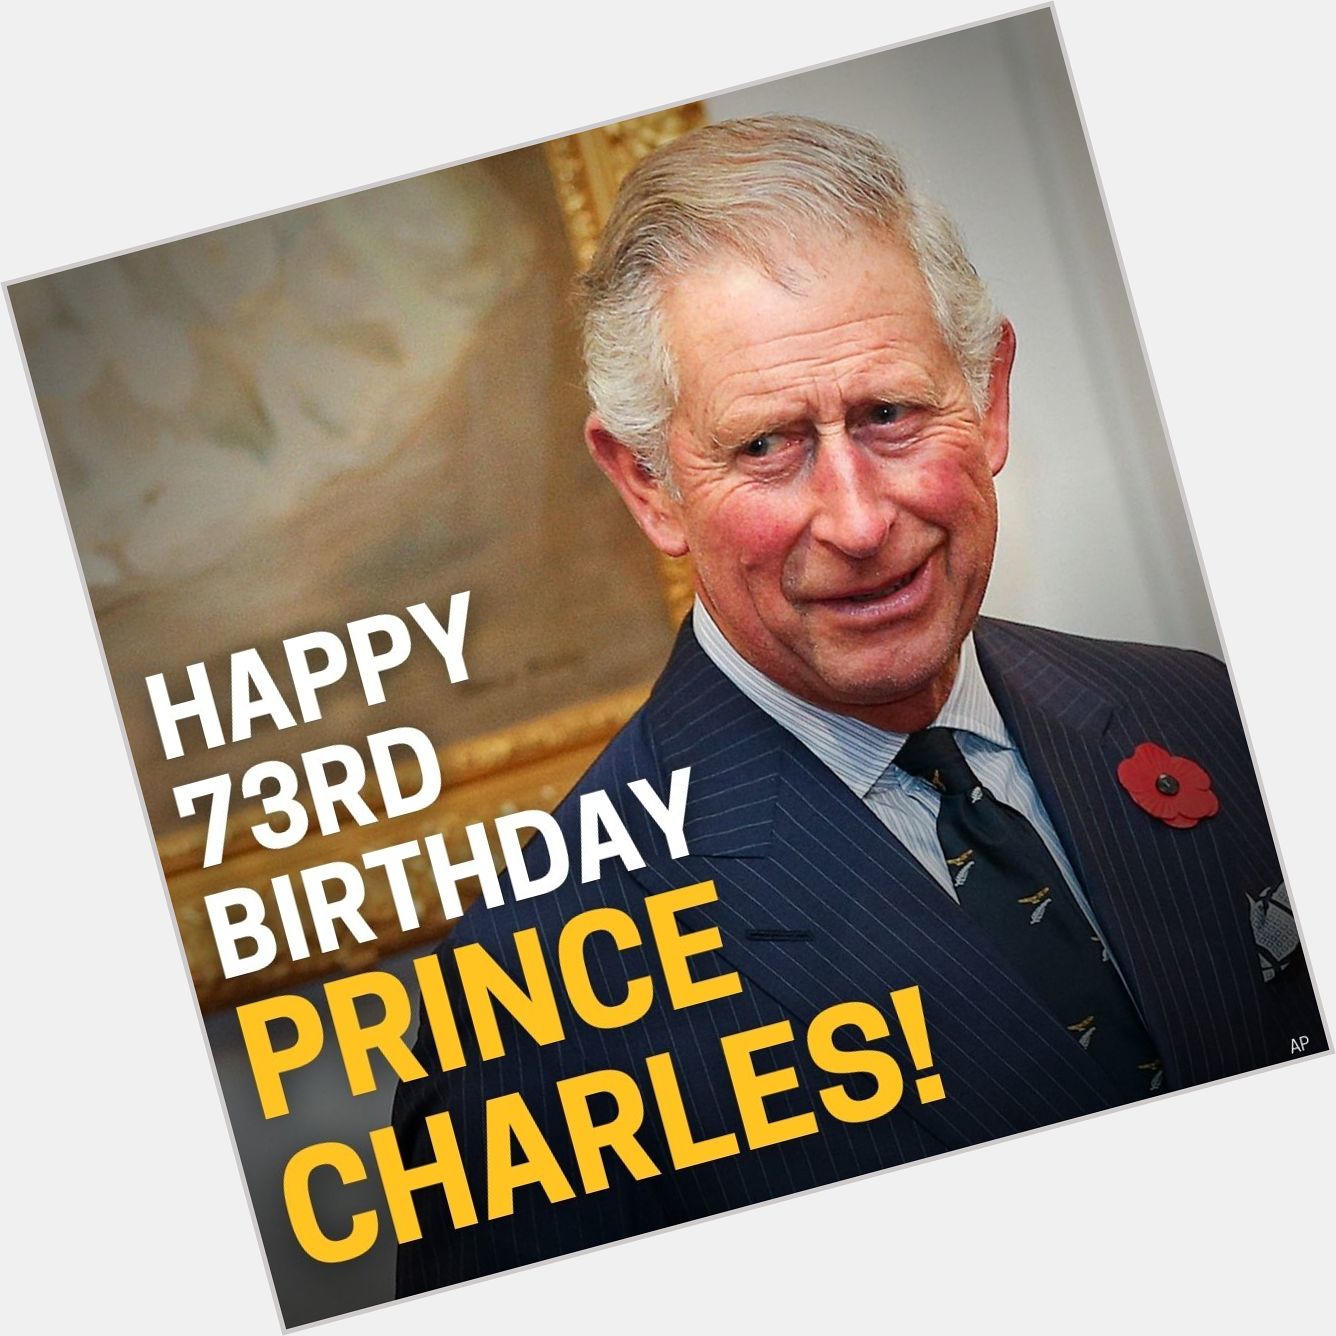 Happy birthday Prince Charles! 